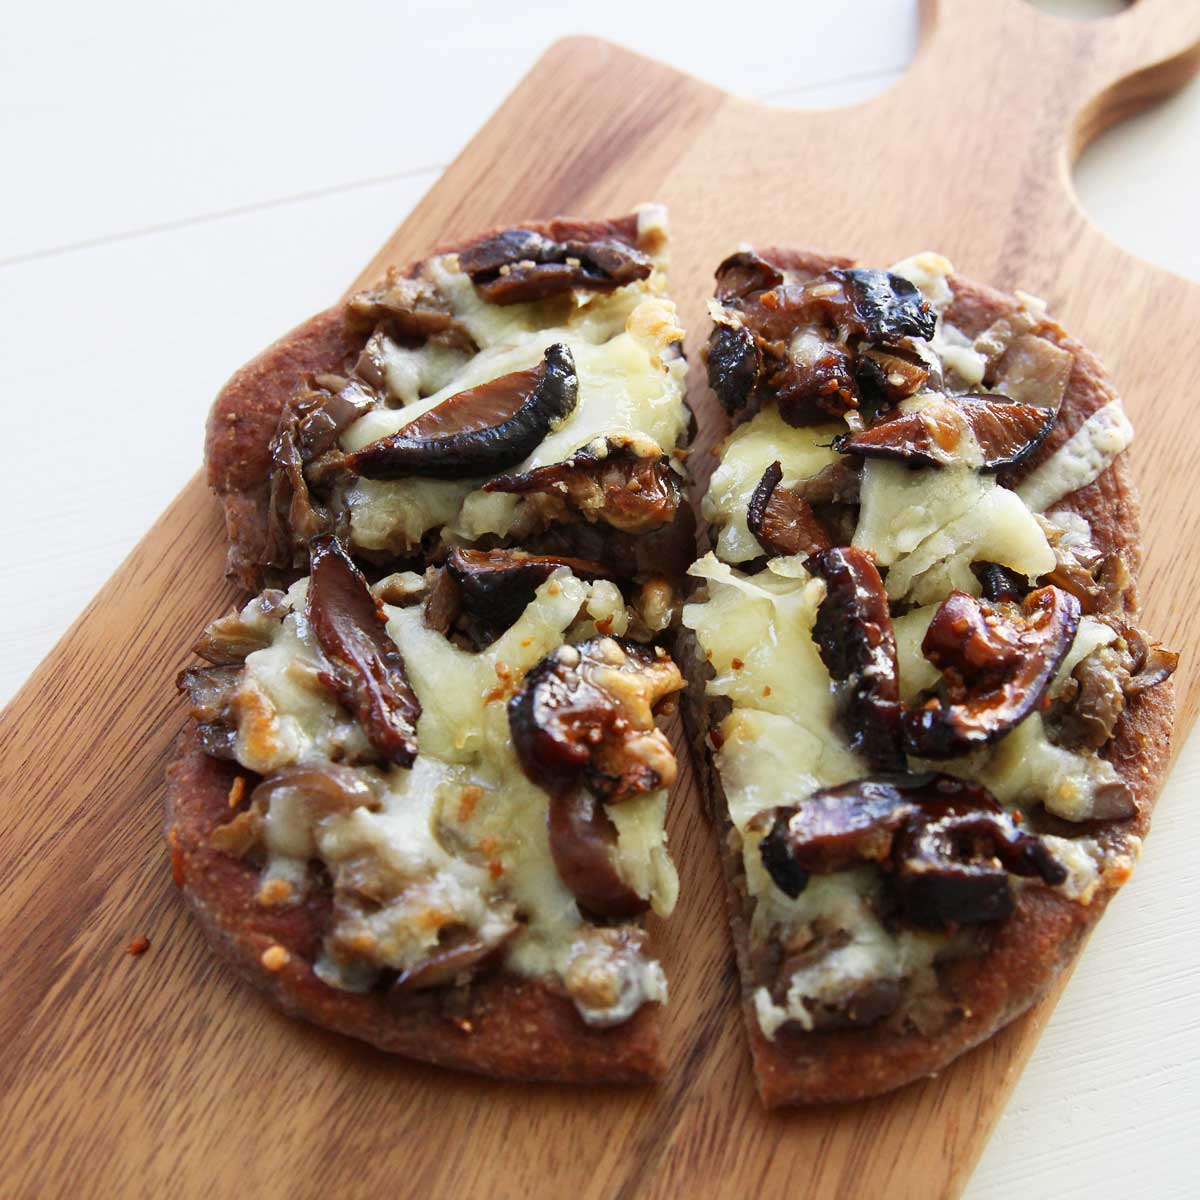 vegan flatbread topping ideas and flatbread pizza recipes - shiitake mushroom